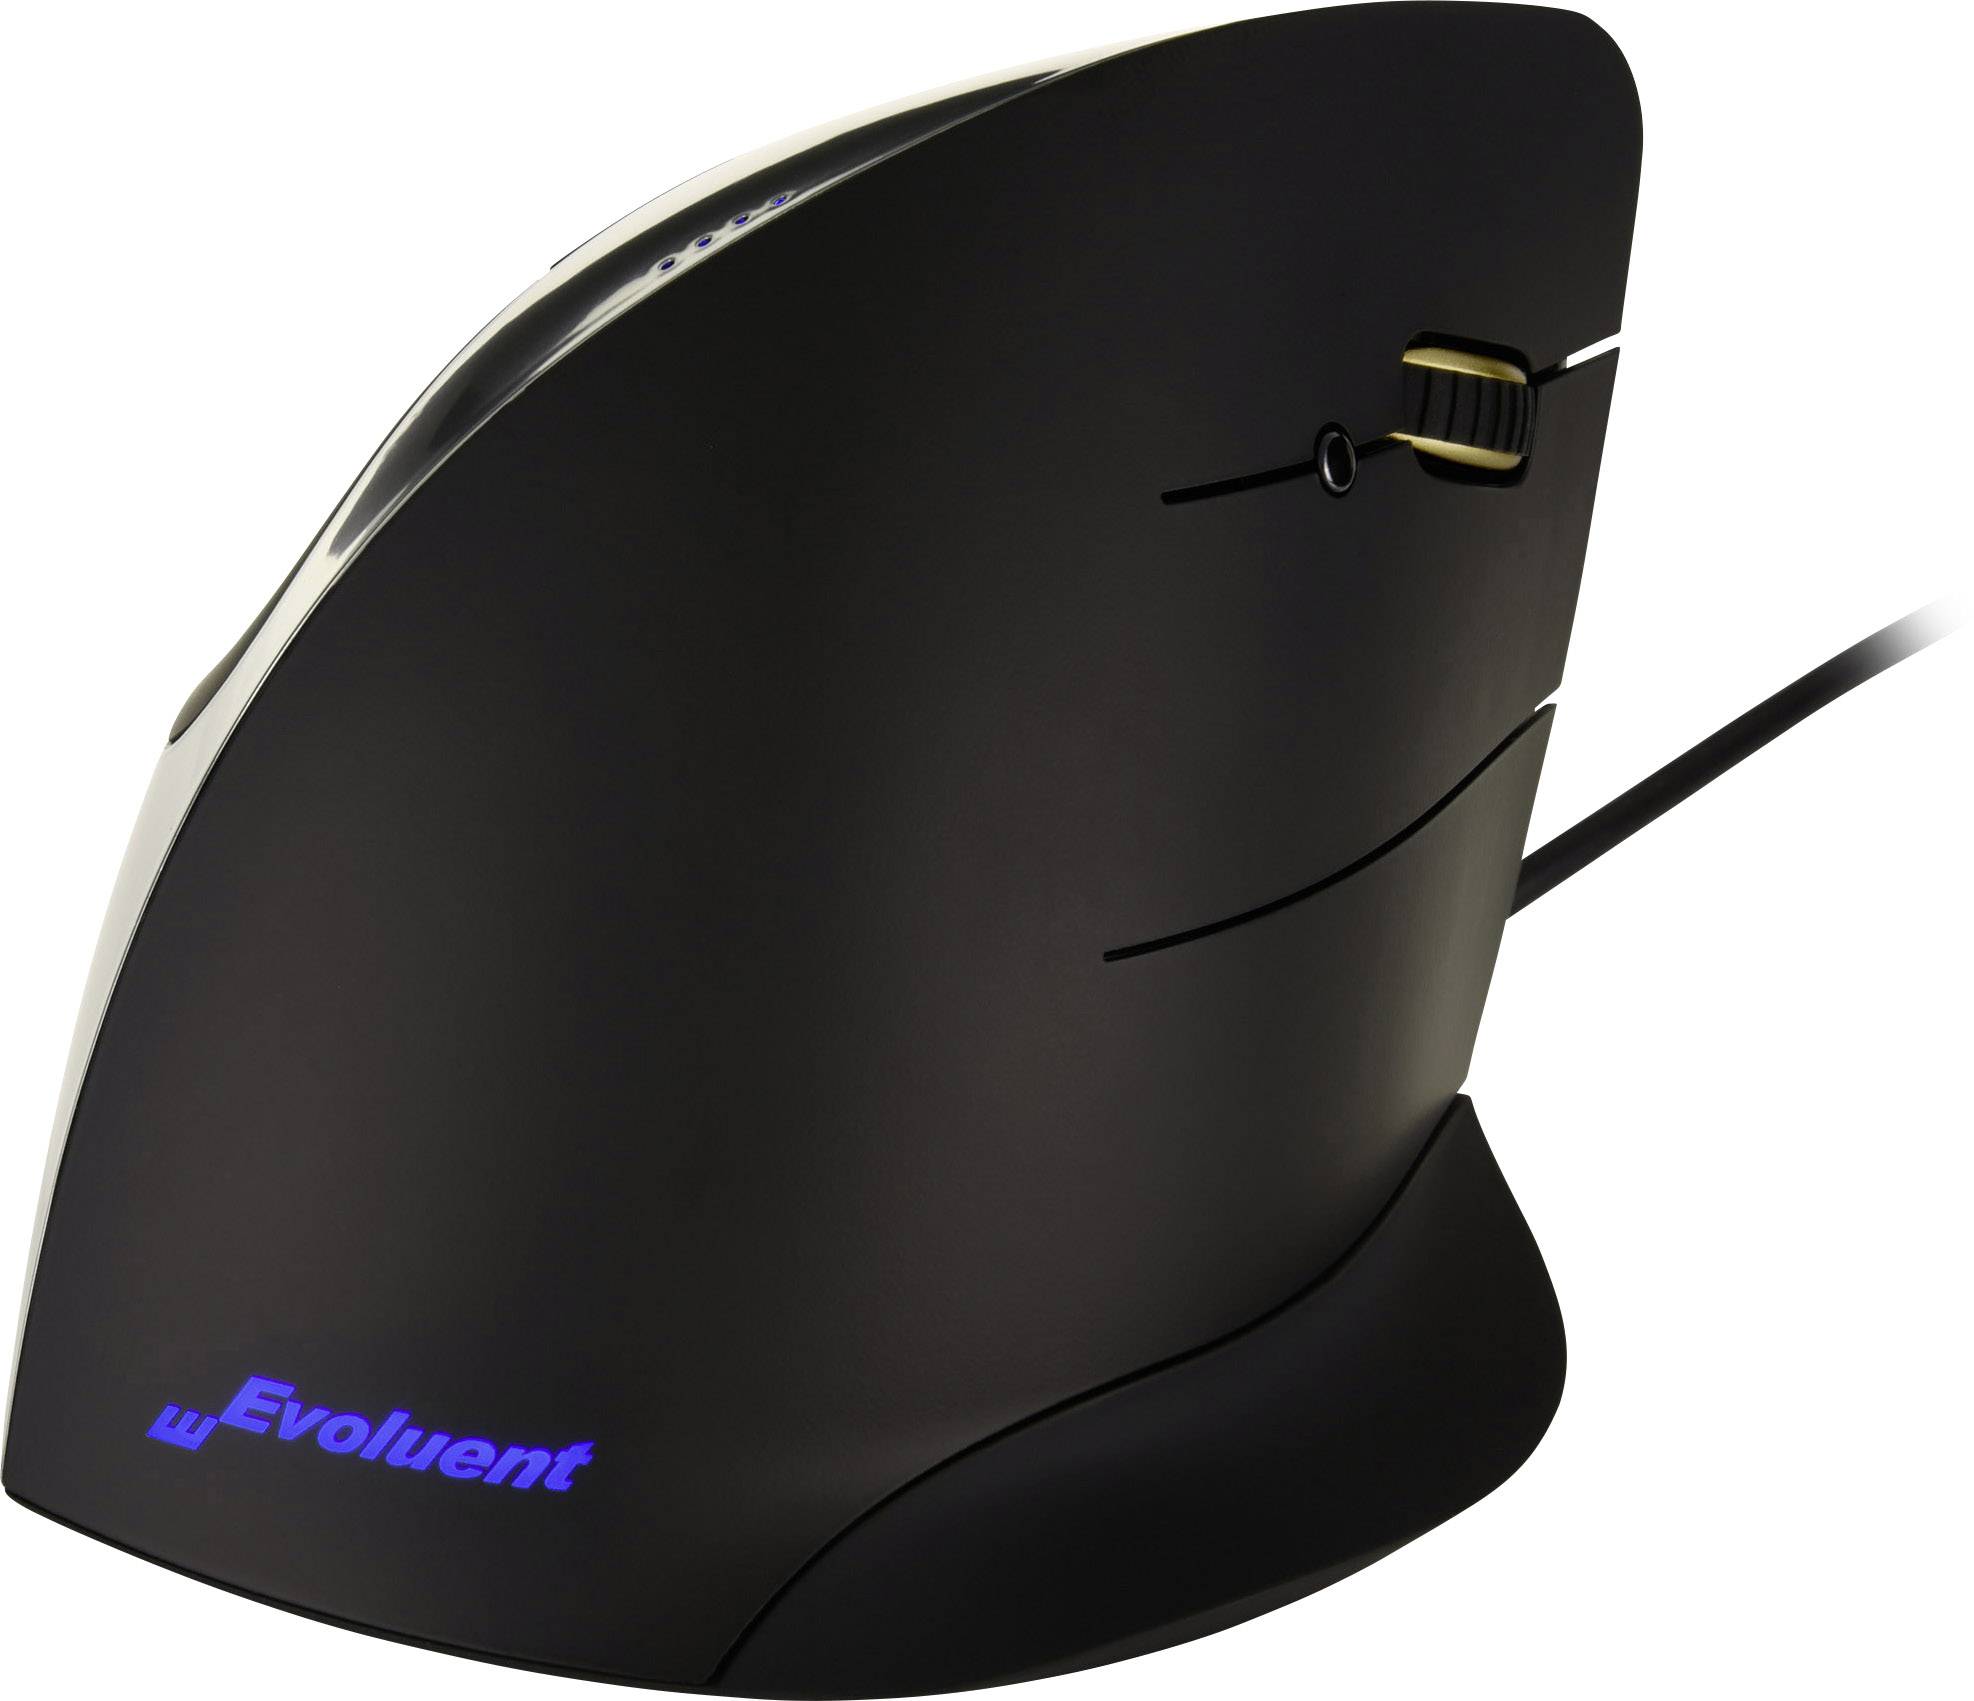 EVOLUENT Vertical Mouse C Rechte Hand USB Ergonomische Maus Ergonomie PC Zubehoer